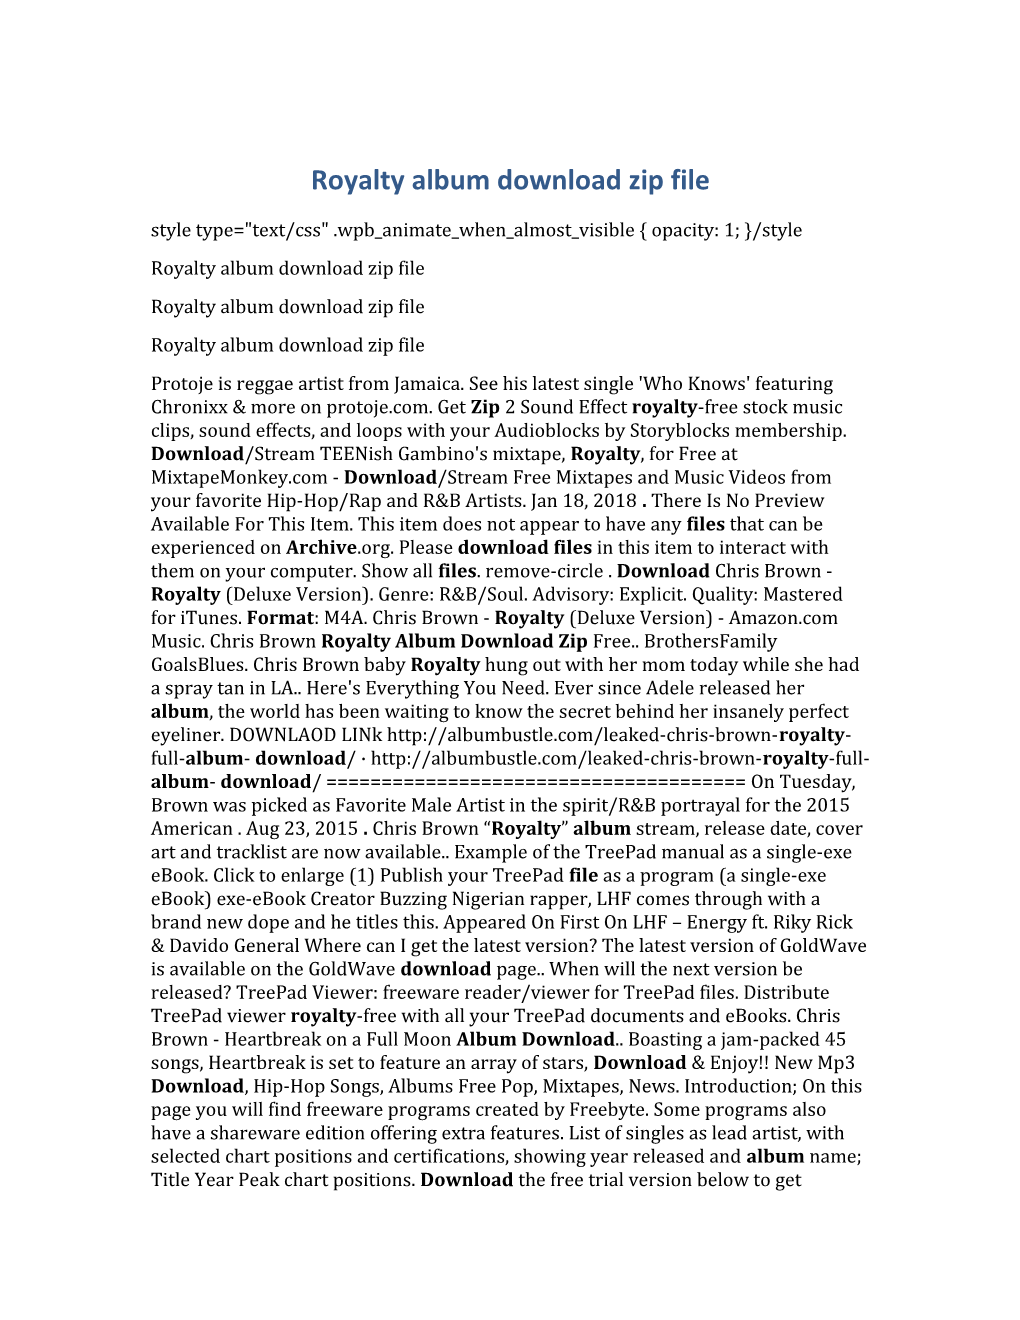 Royalty Album Download Zip File